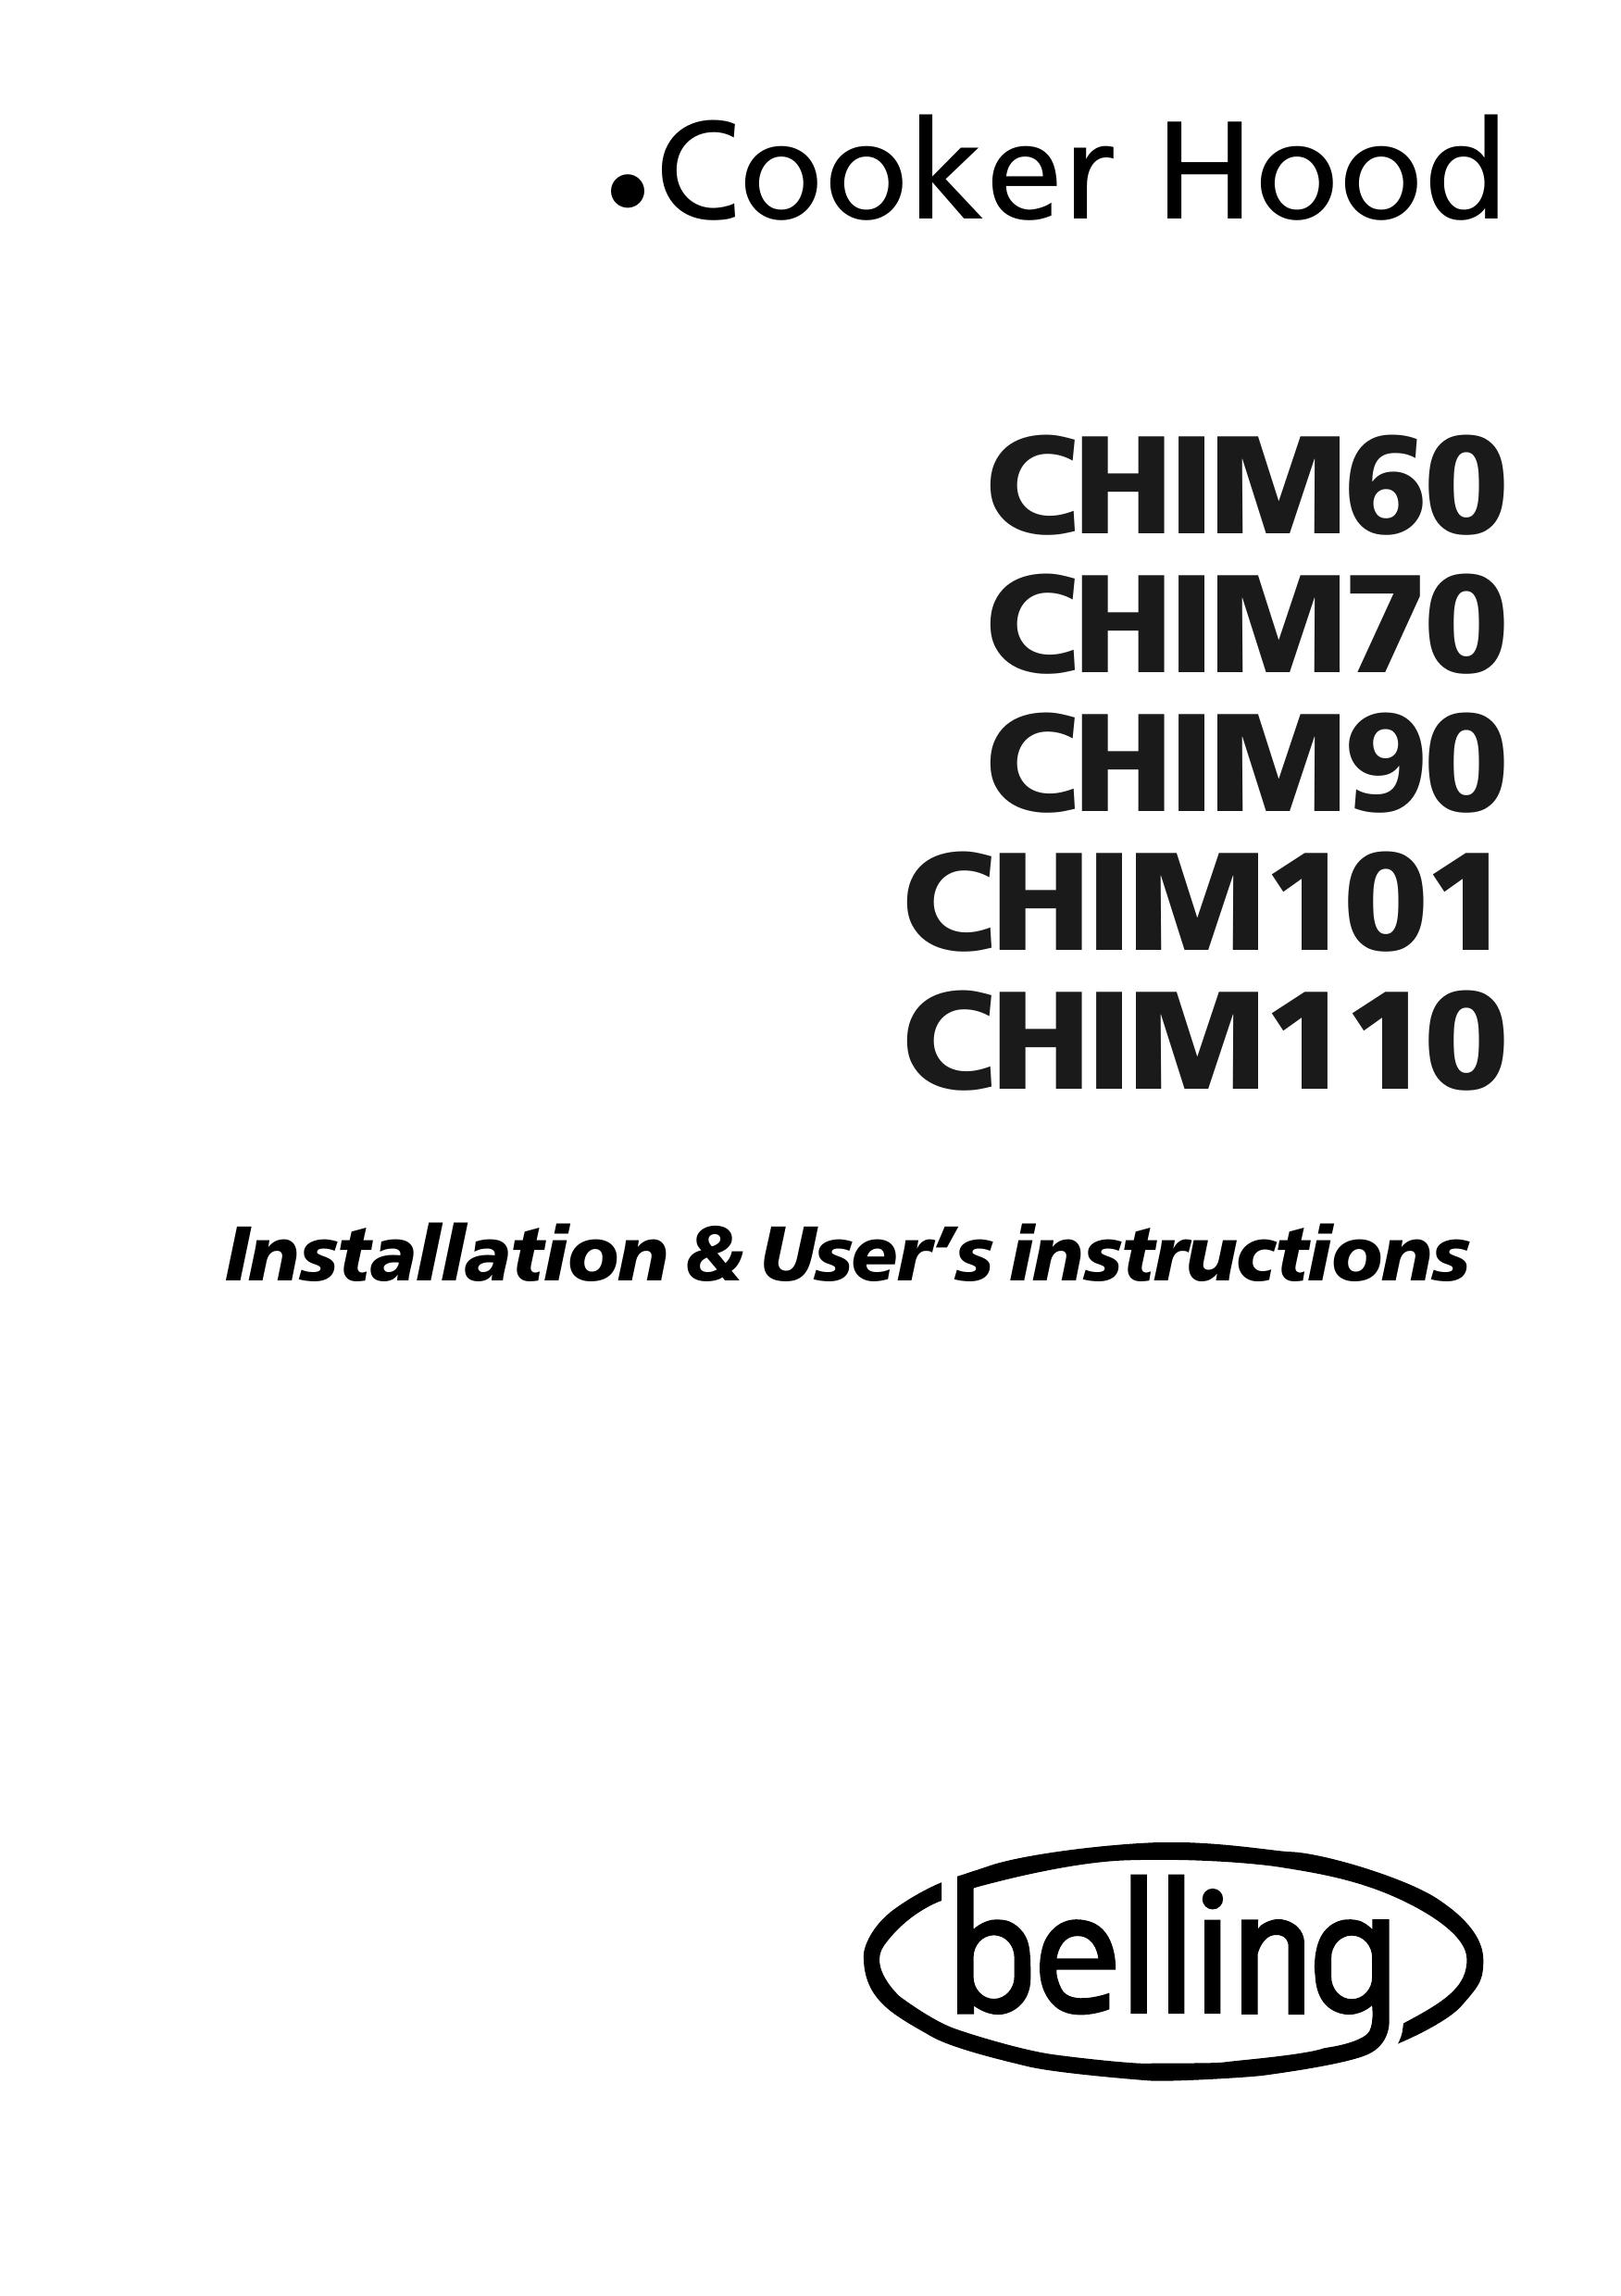 Glen Dimplex Home Appliances Ltd CHIM70 Ventilation Hood User Manual